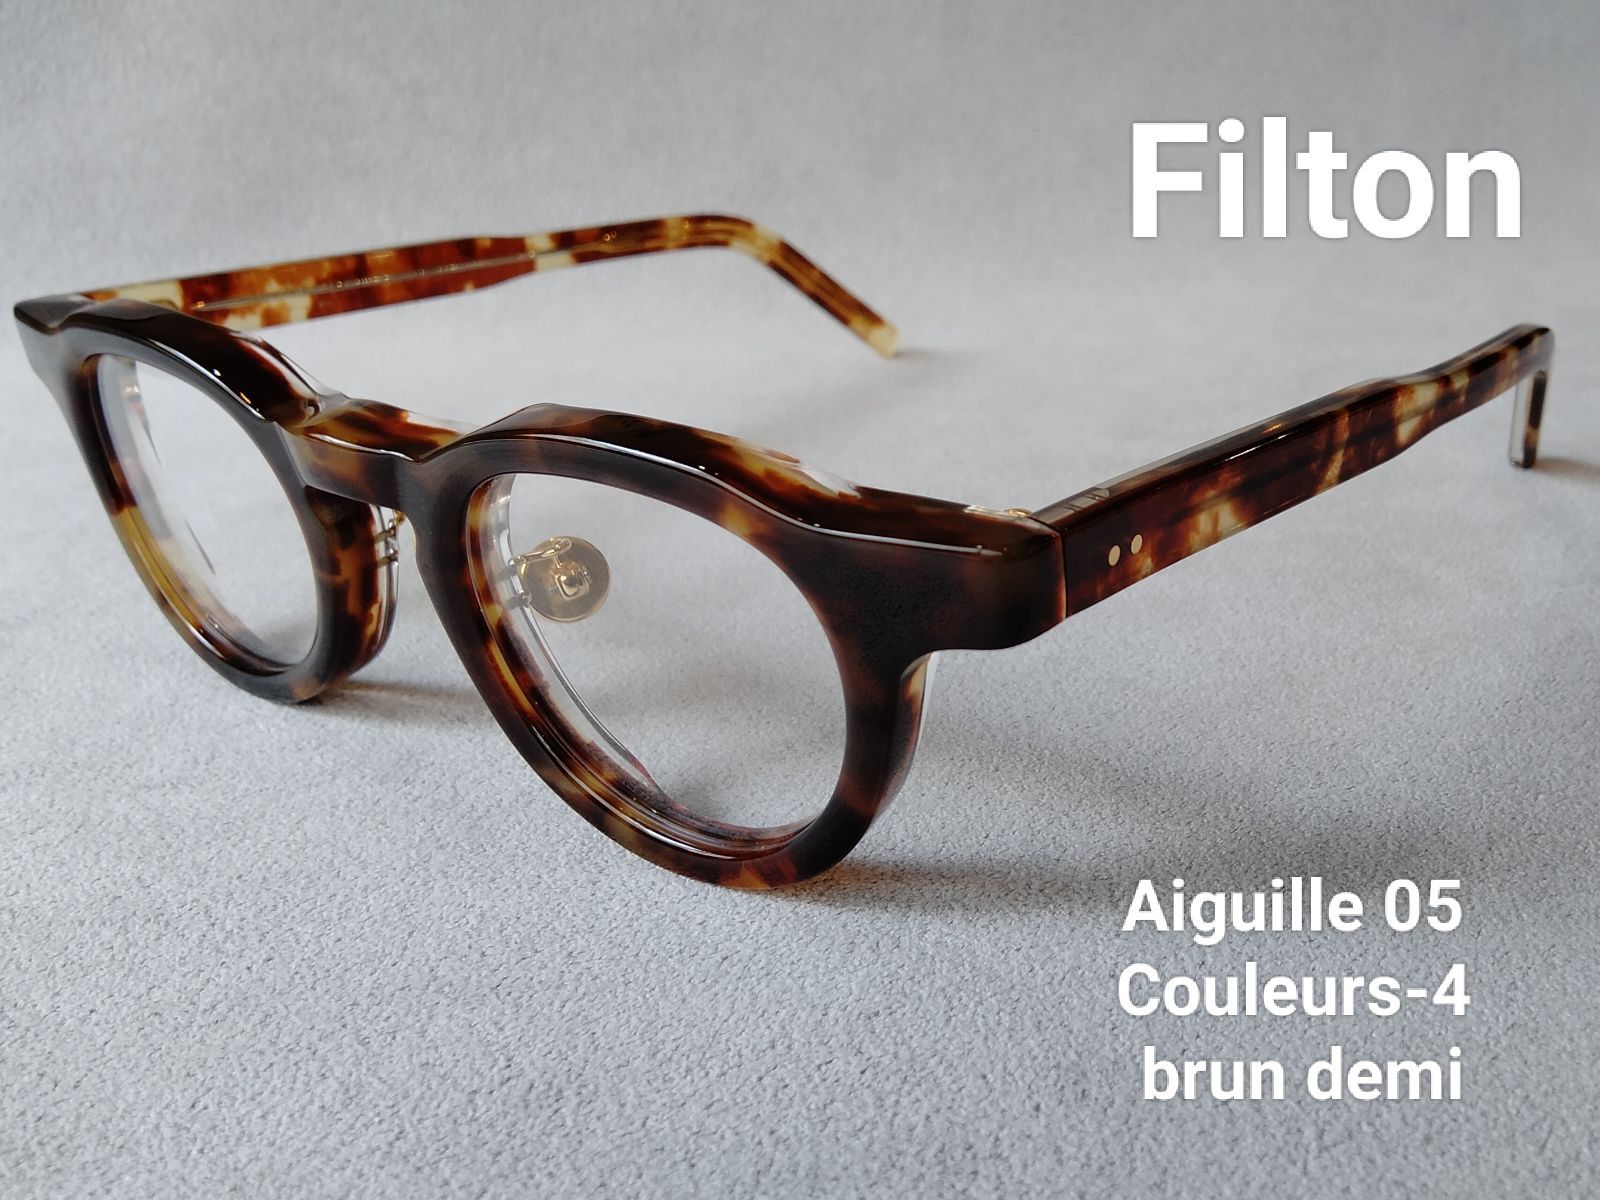 Filton(フィルトン)「Aiguille 05」brun demi - 4/茶 デミ （縫い針コレクション）